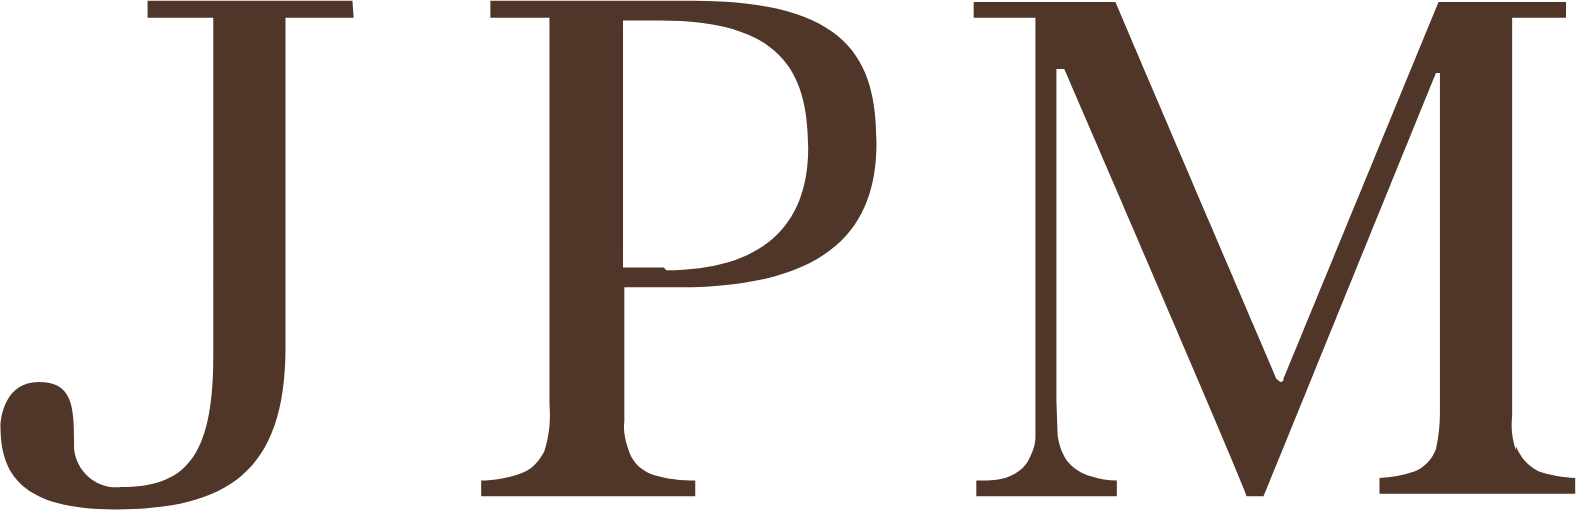 JPMorgan Chase logo (transparent PNG)